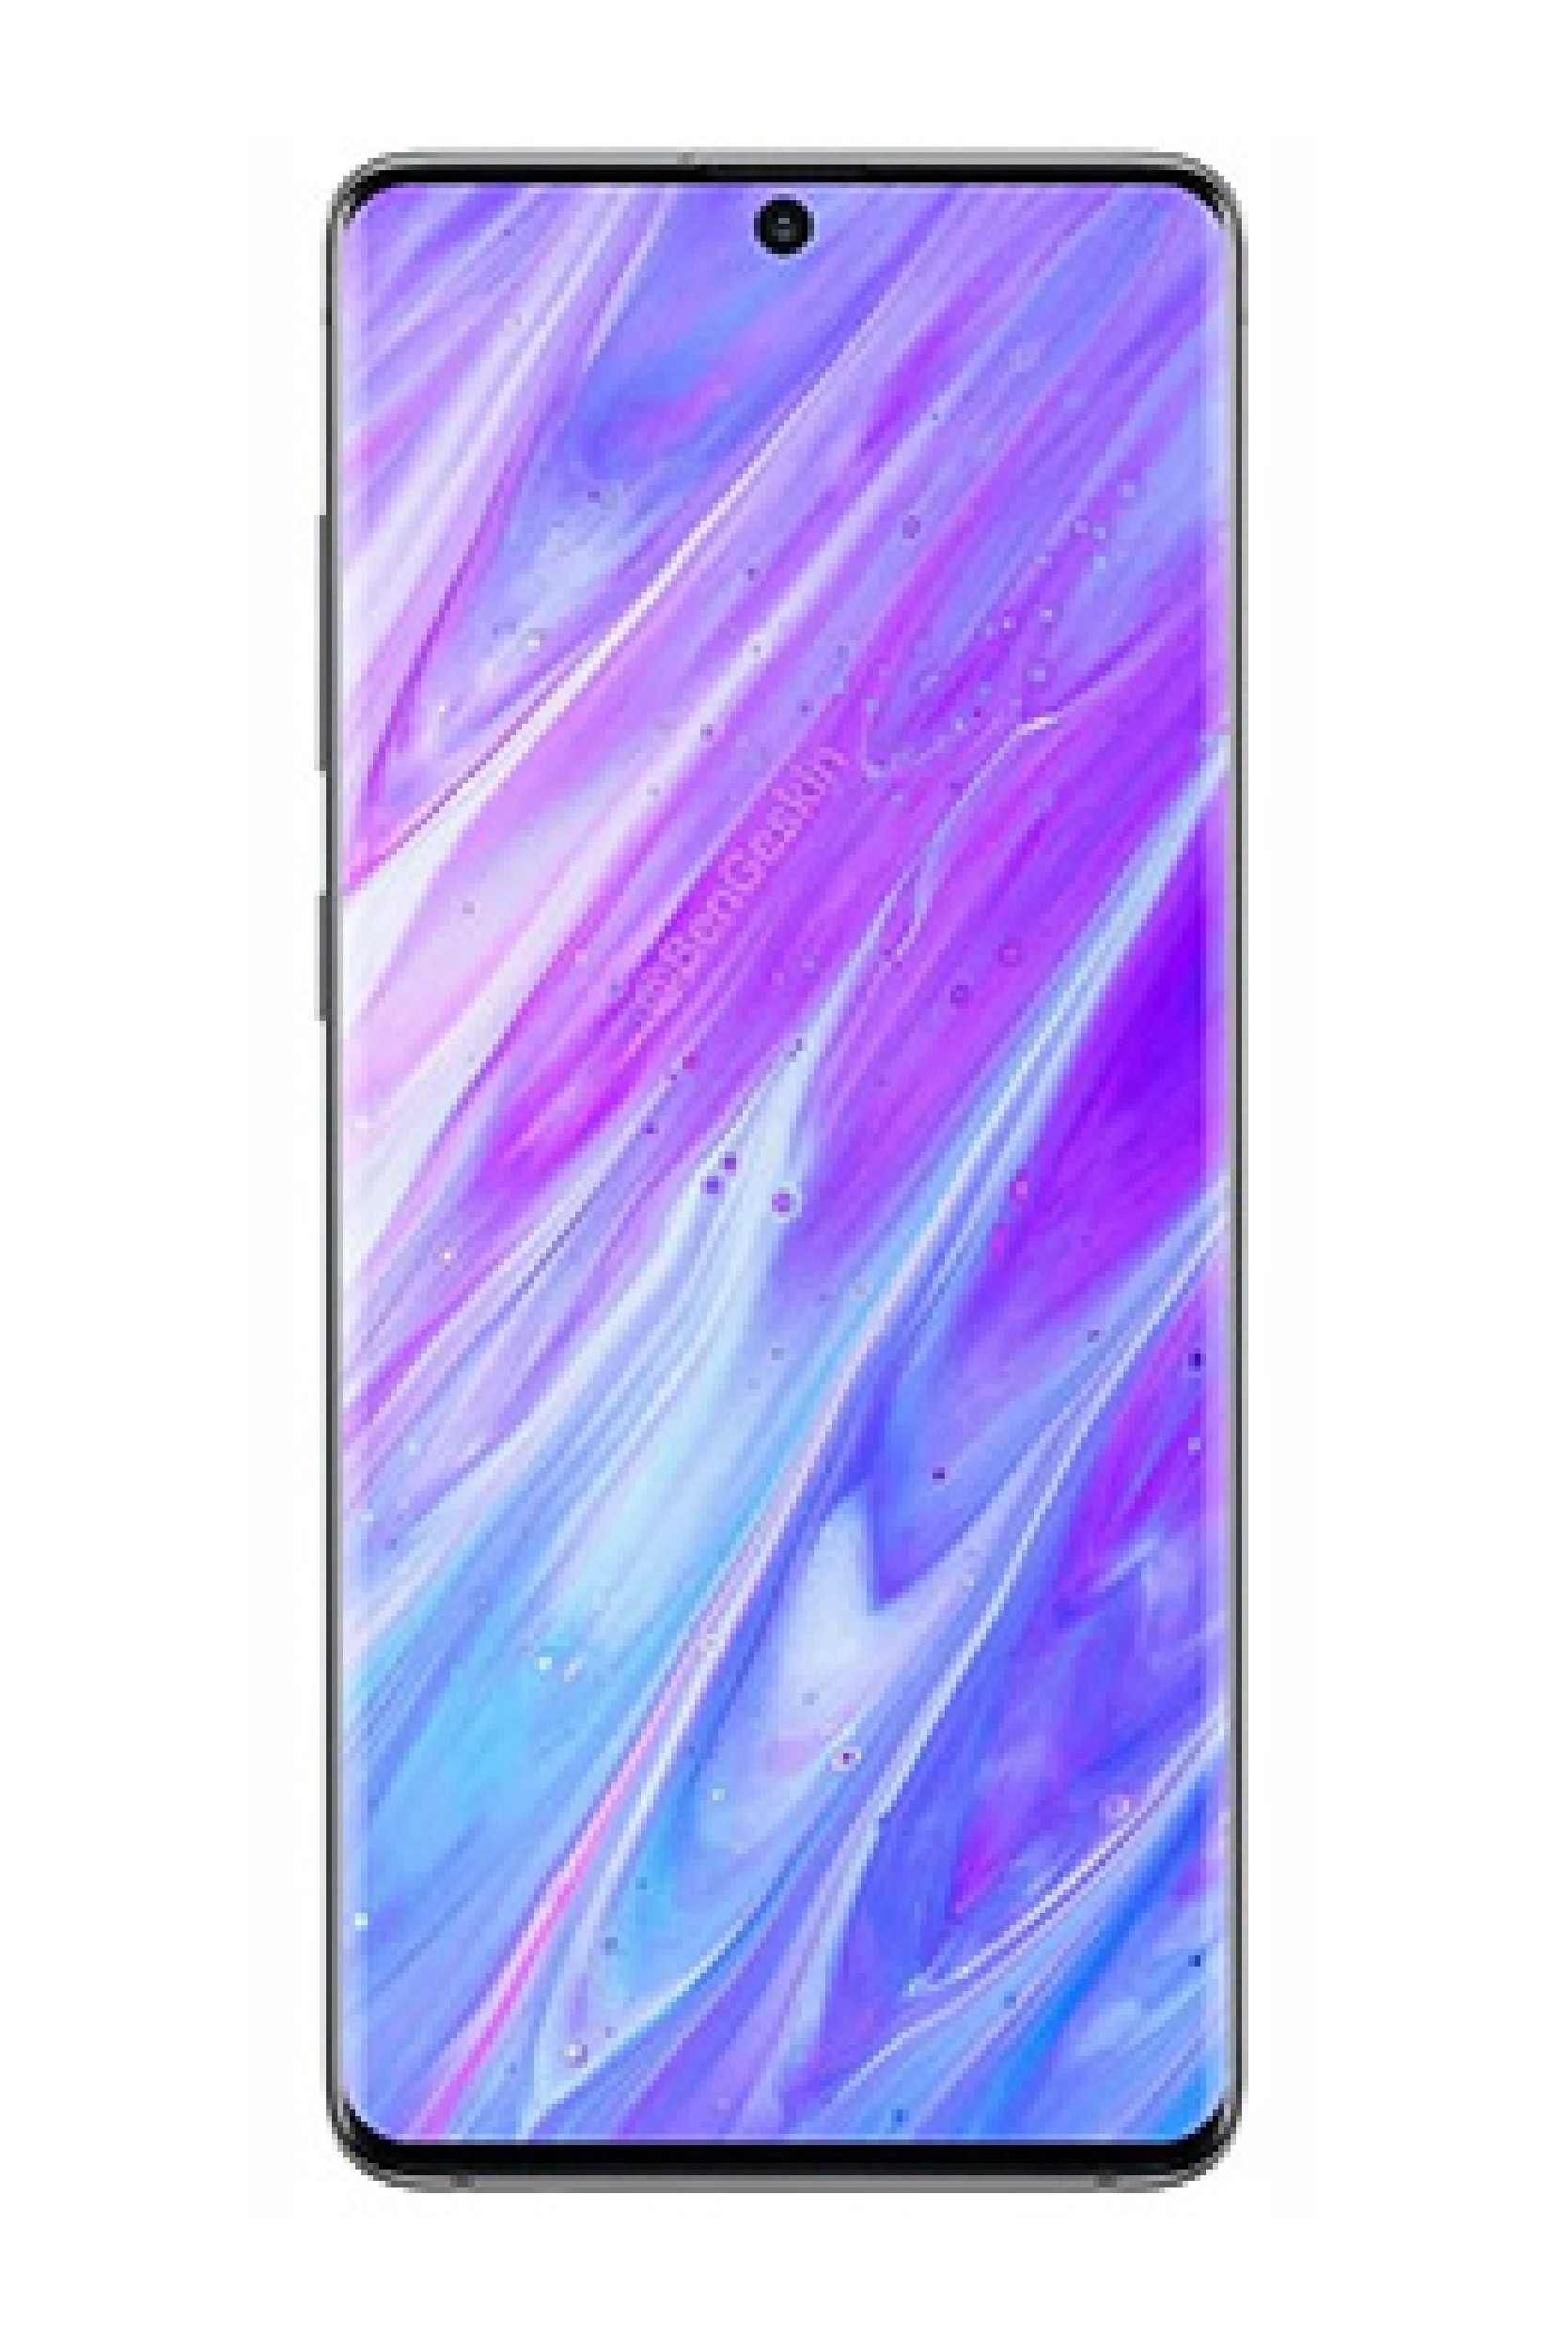 Samsung Galaxy S20 Ultra 5G Price in Pakistan & Specs